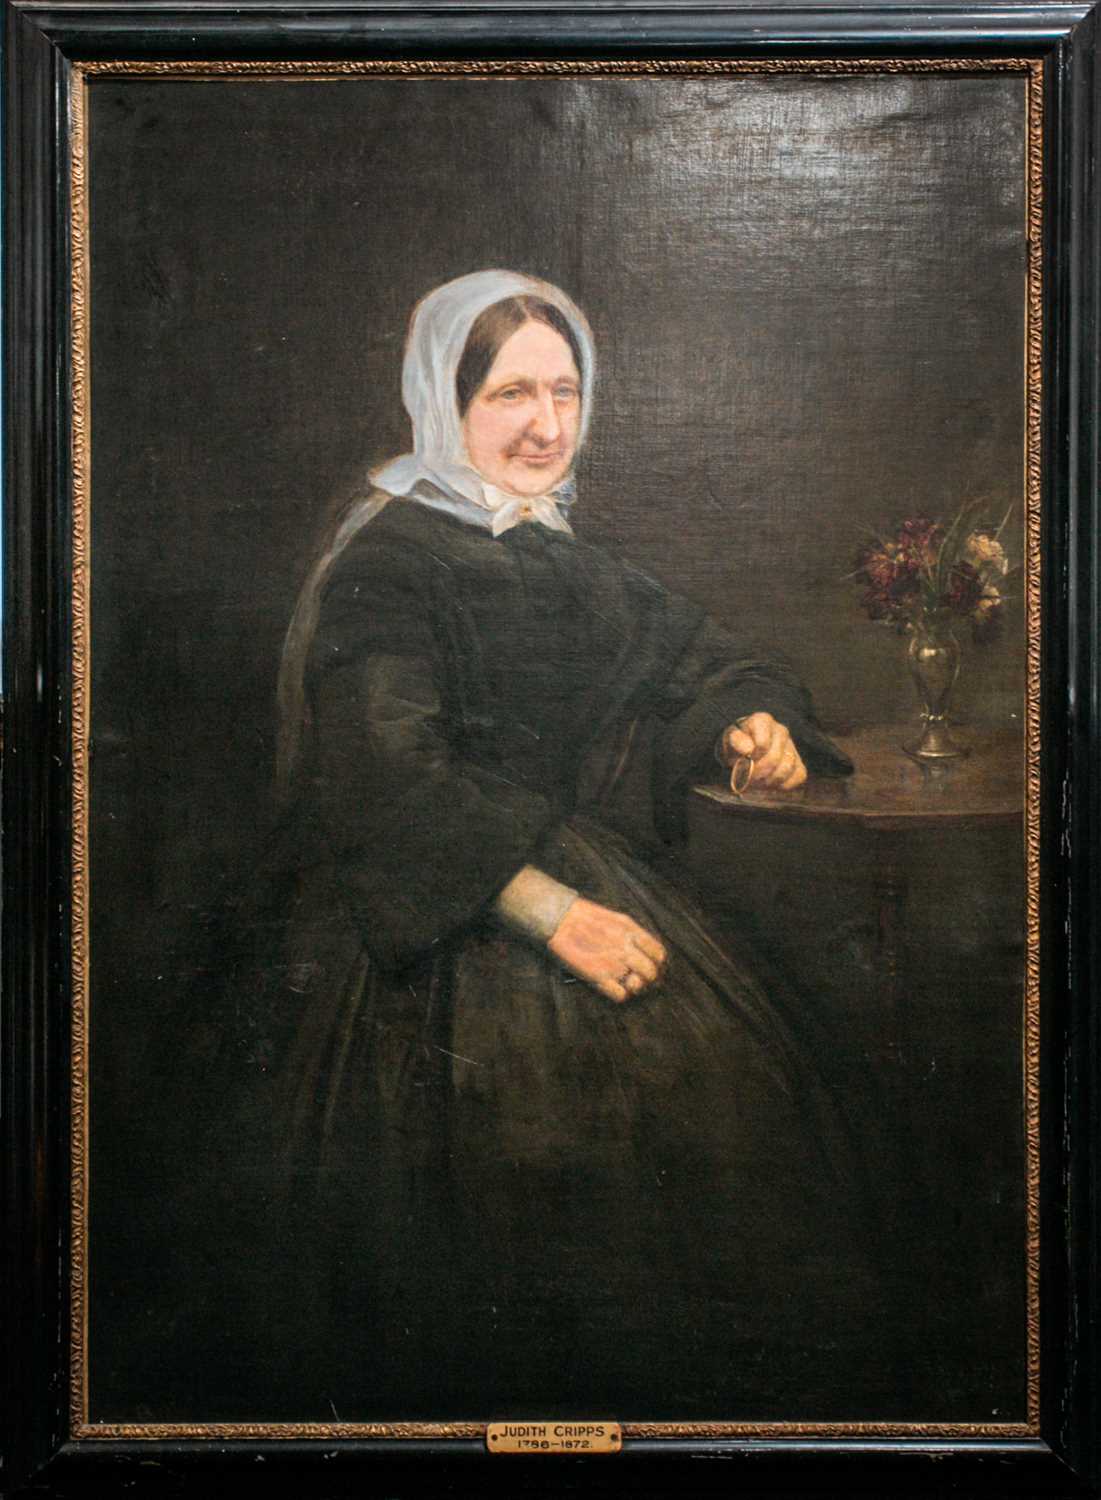 Late 19th century English school, portrait of Judith Cripps 1786-1872, oil on canvas. 128 cm x 90